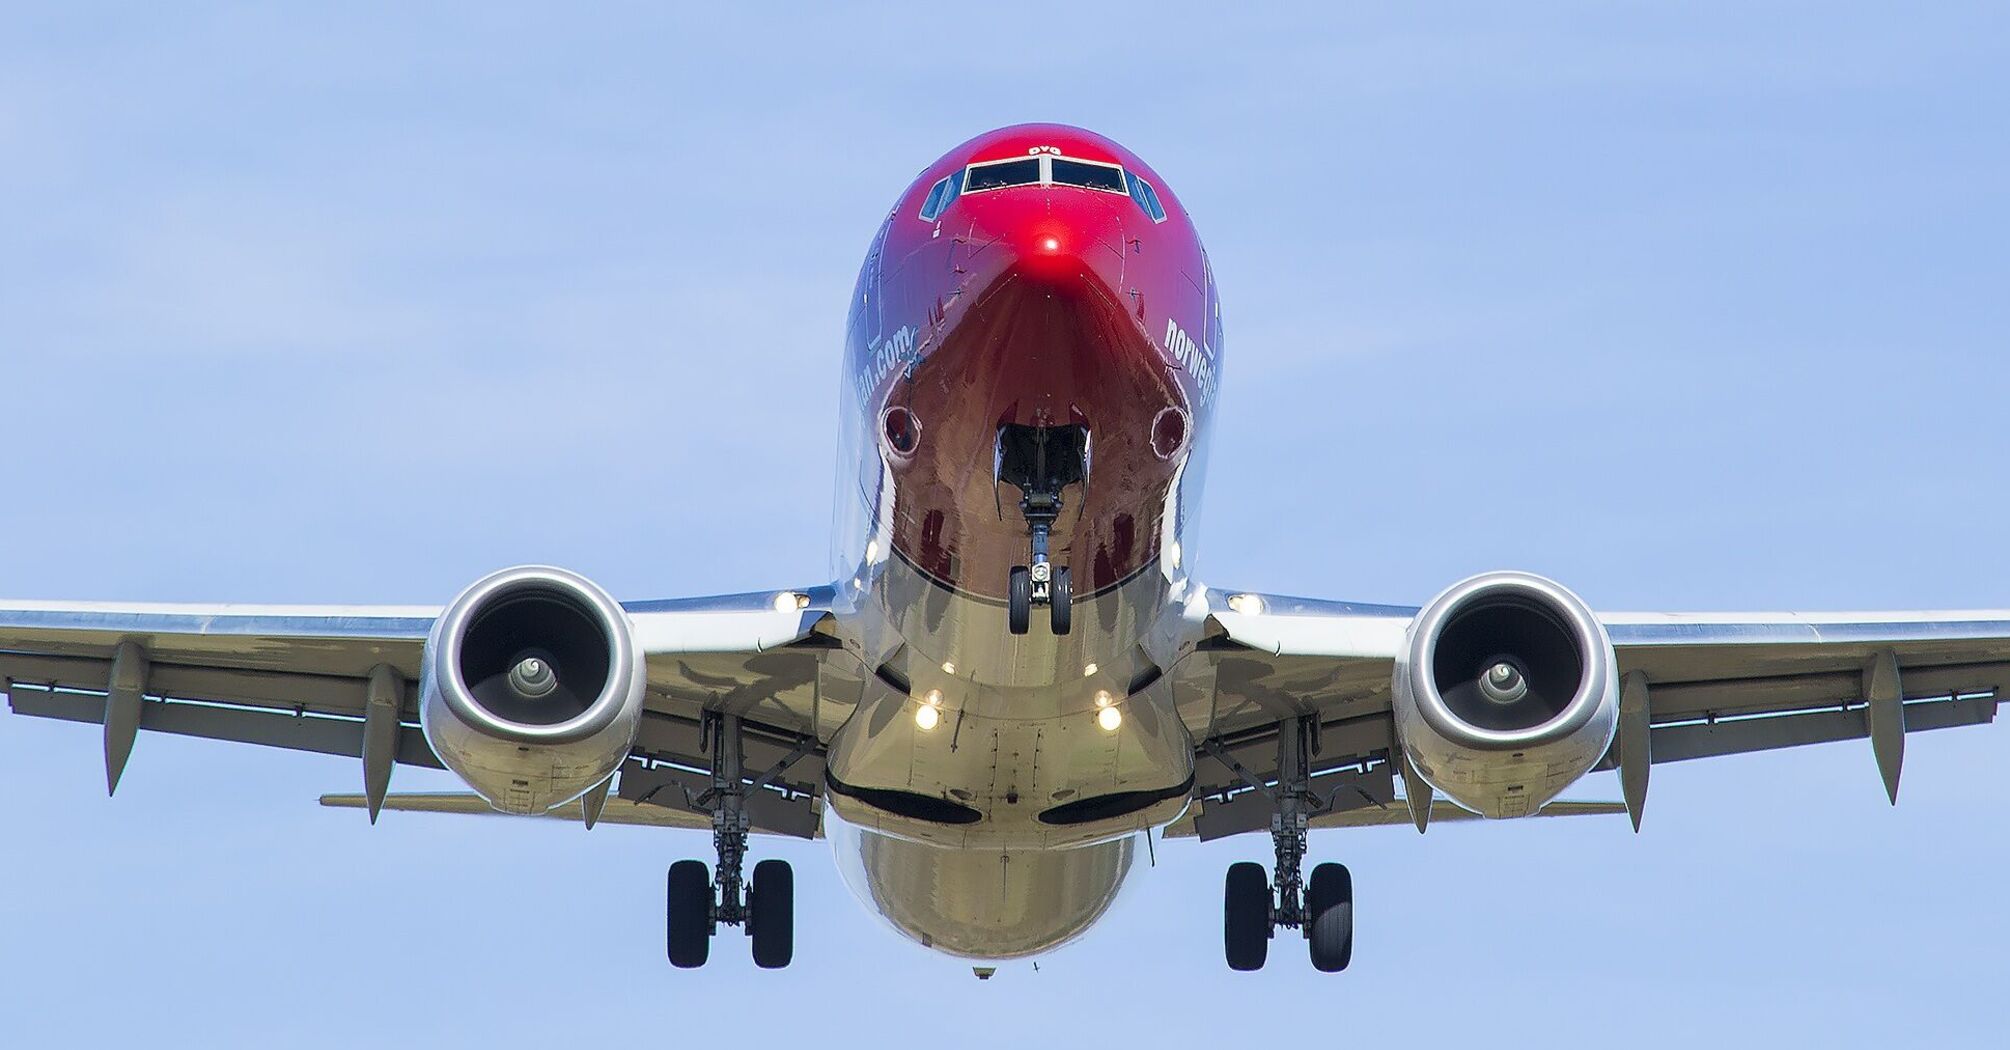 Norwegian Airlines plane taking off